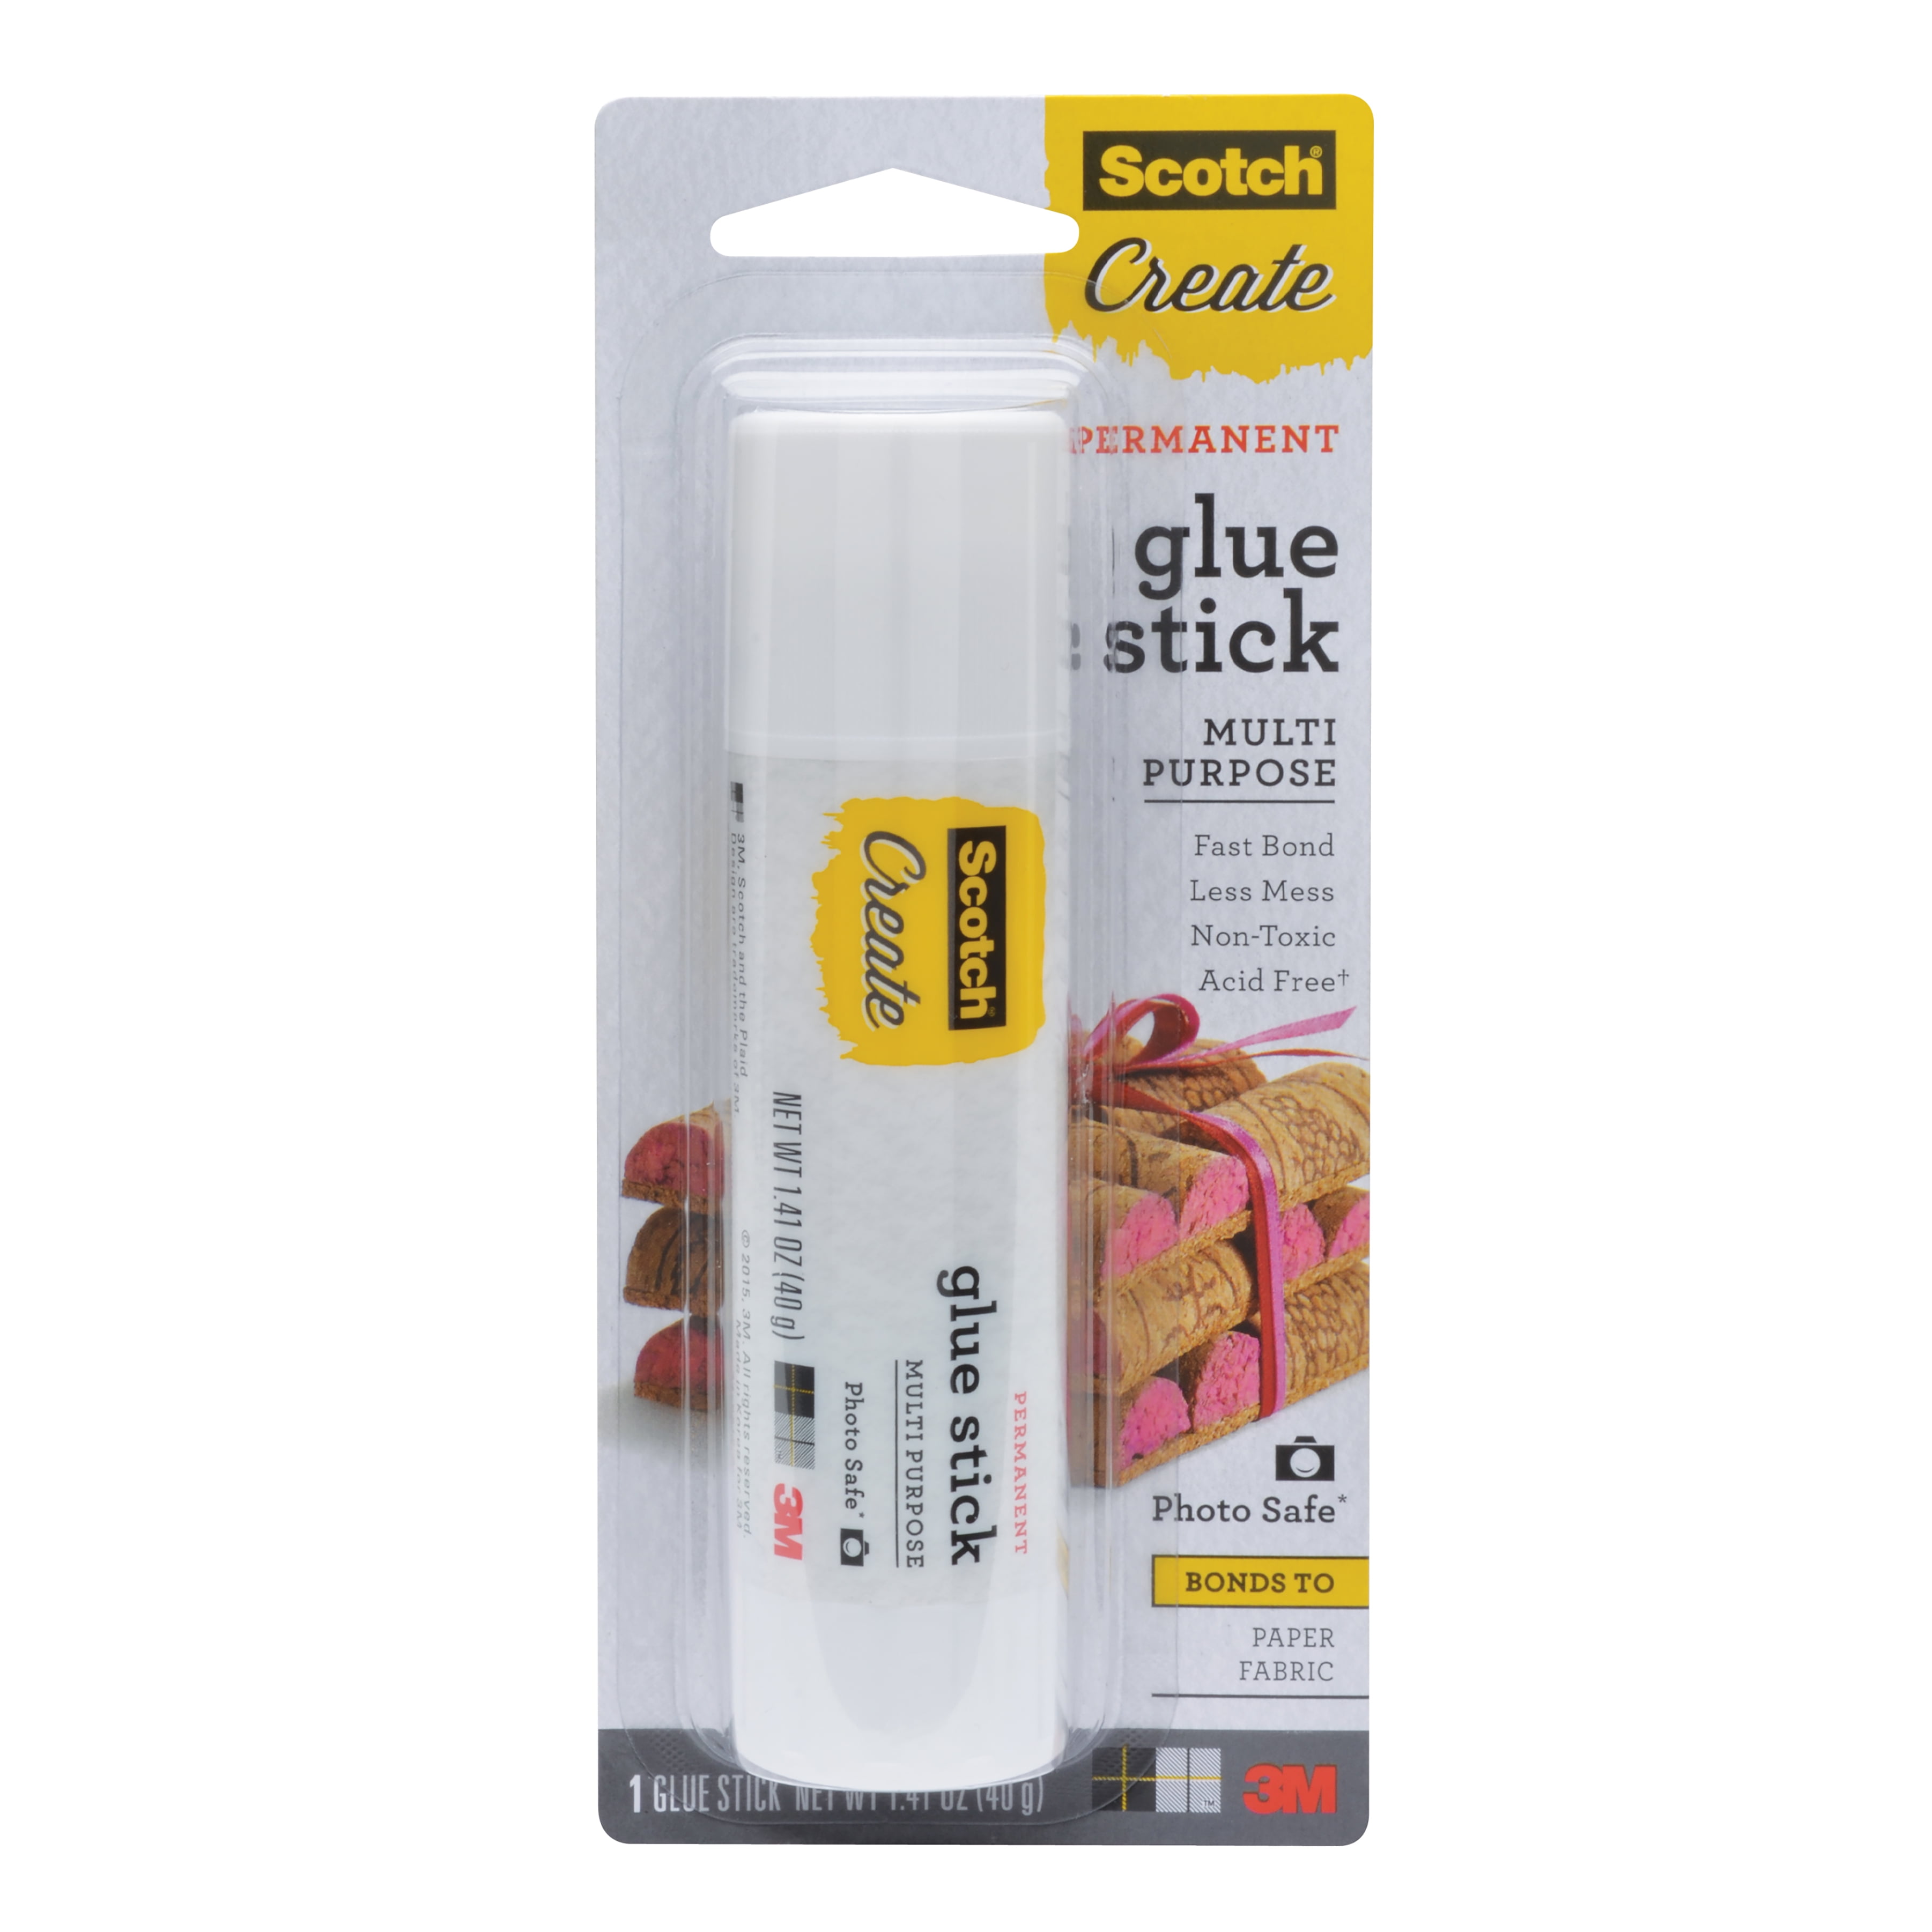 Scotch Glue Stick, .53 oz, Acid Free and Non-Toxic (6015)